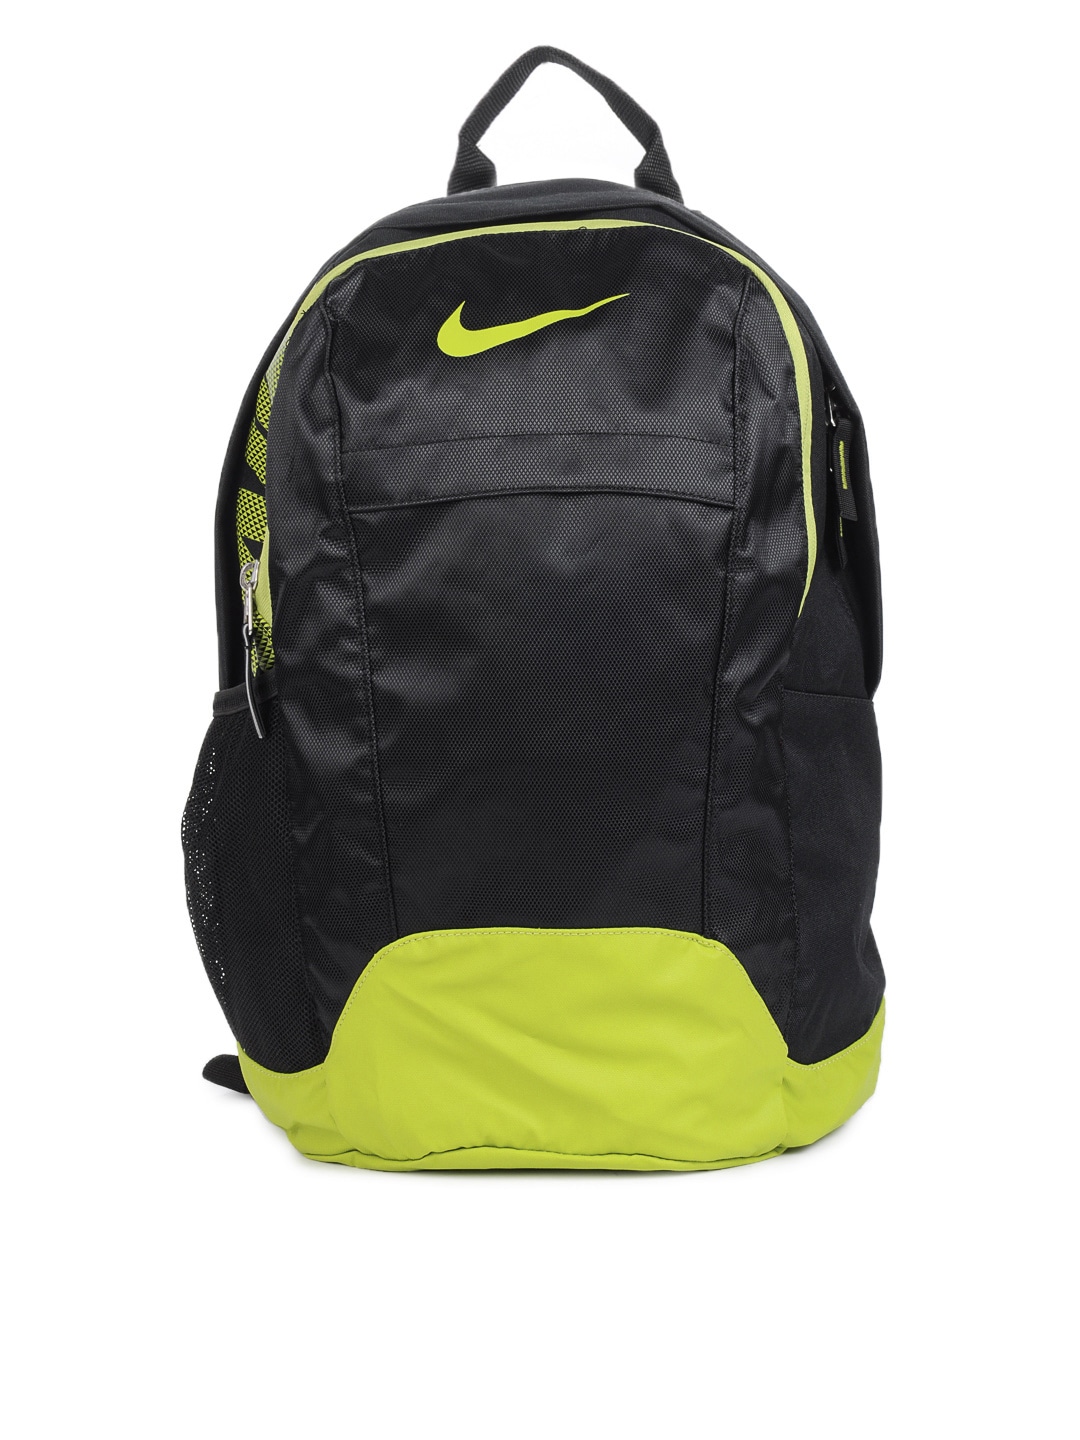 Nike Unisex Black Backpack